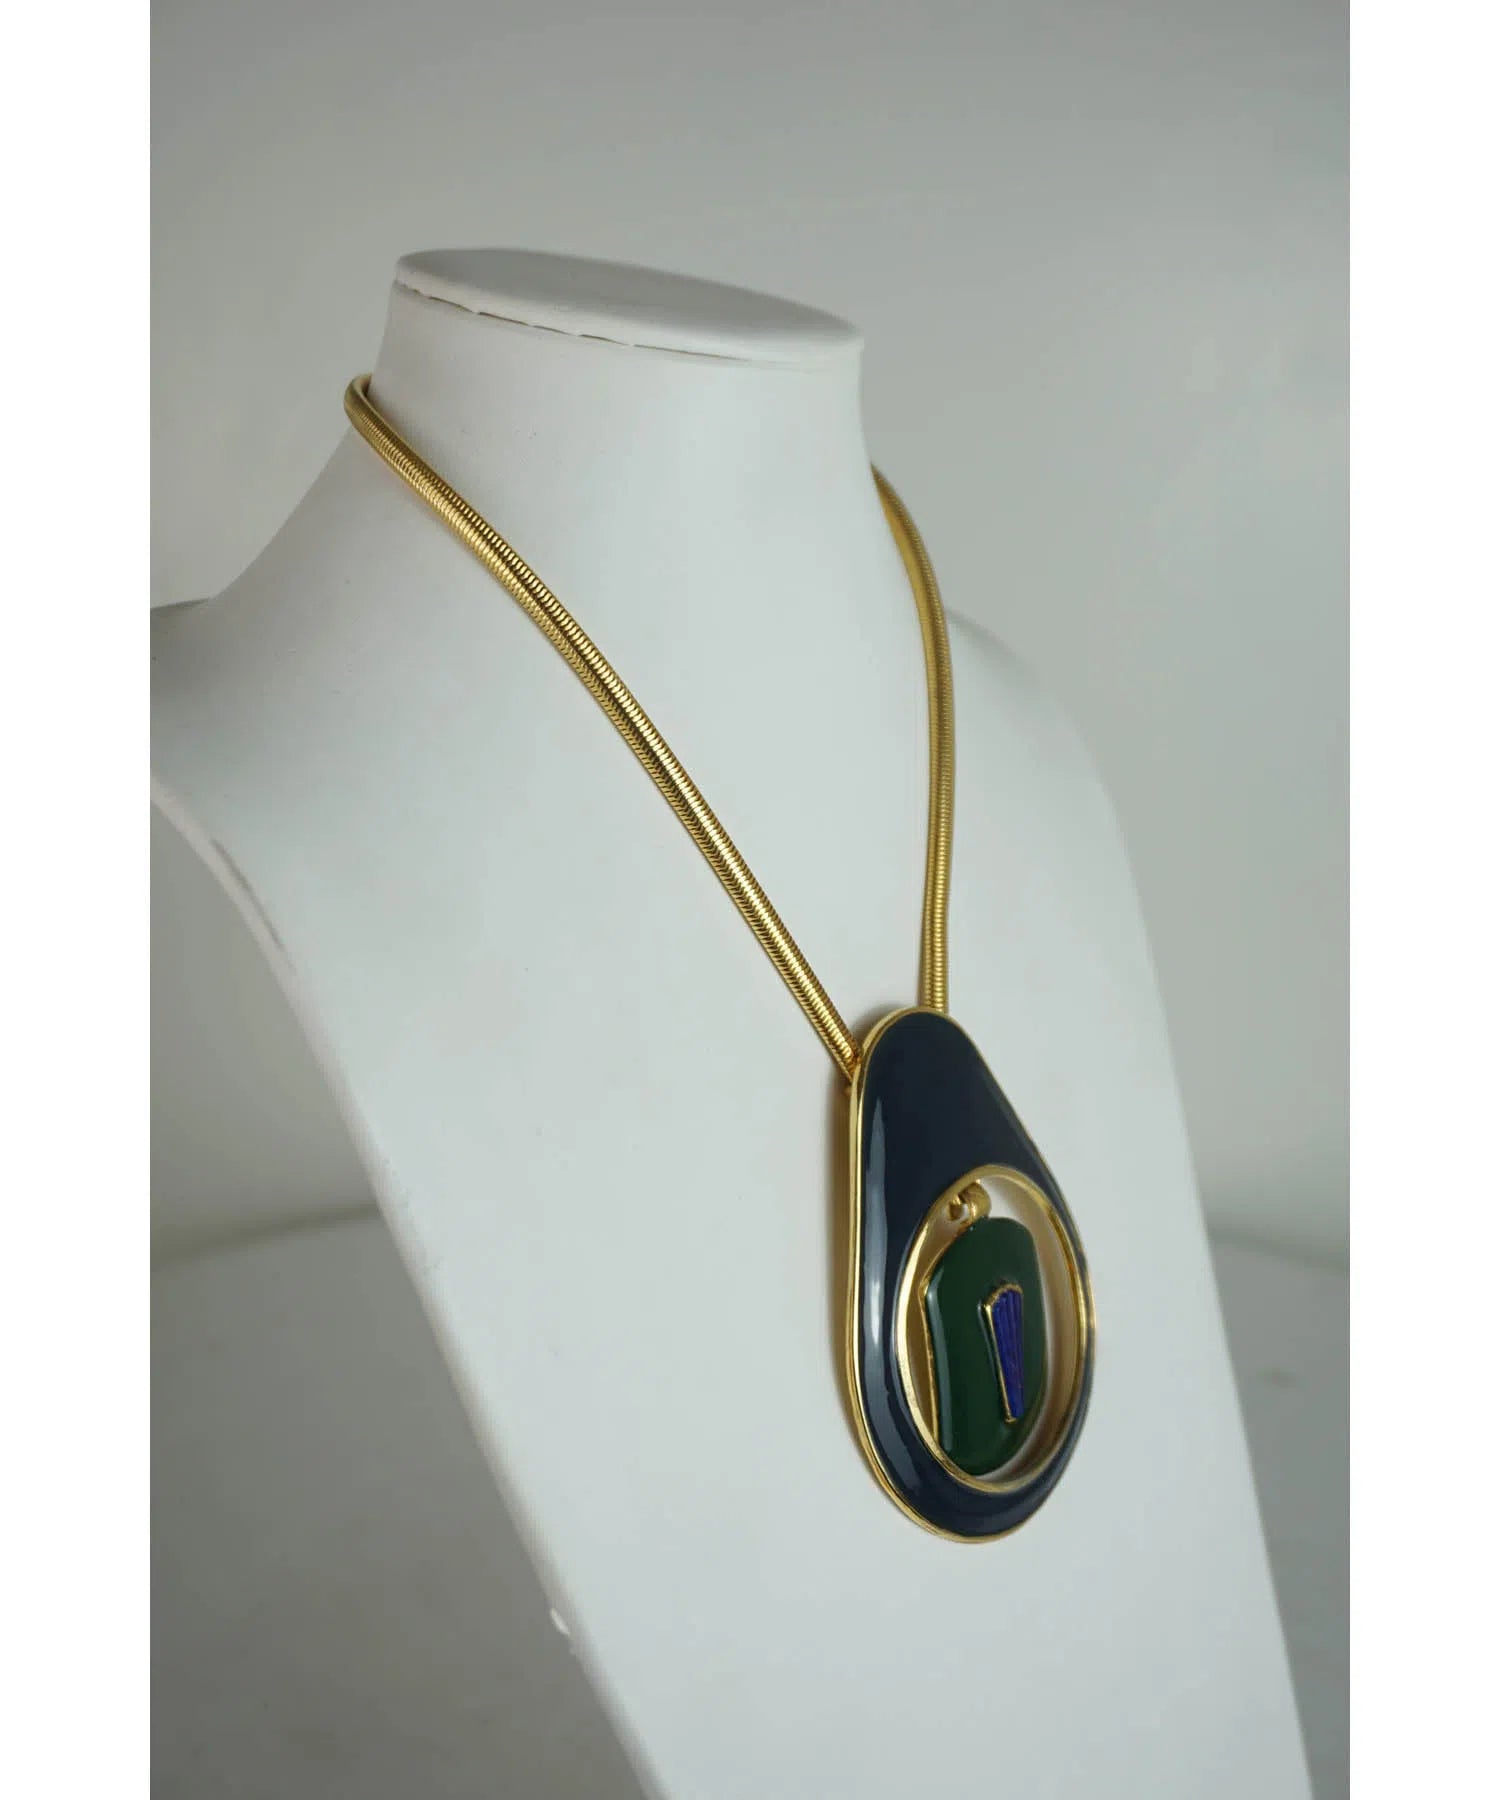 Pierre Cardin Large Enamel Pendant Necklace